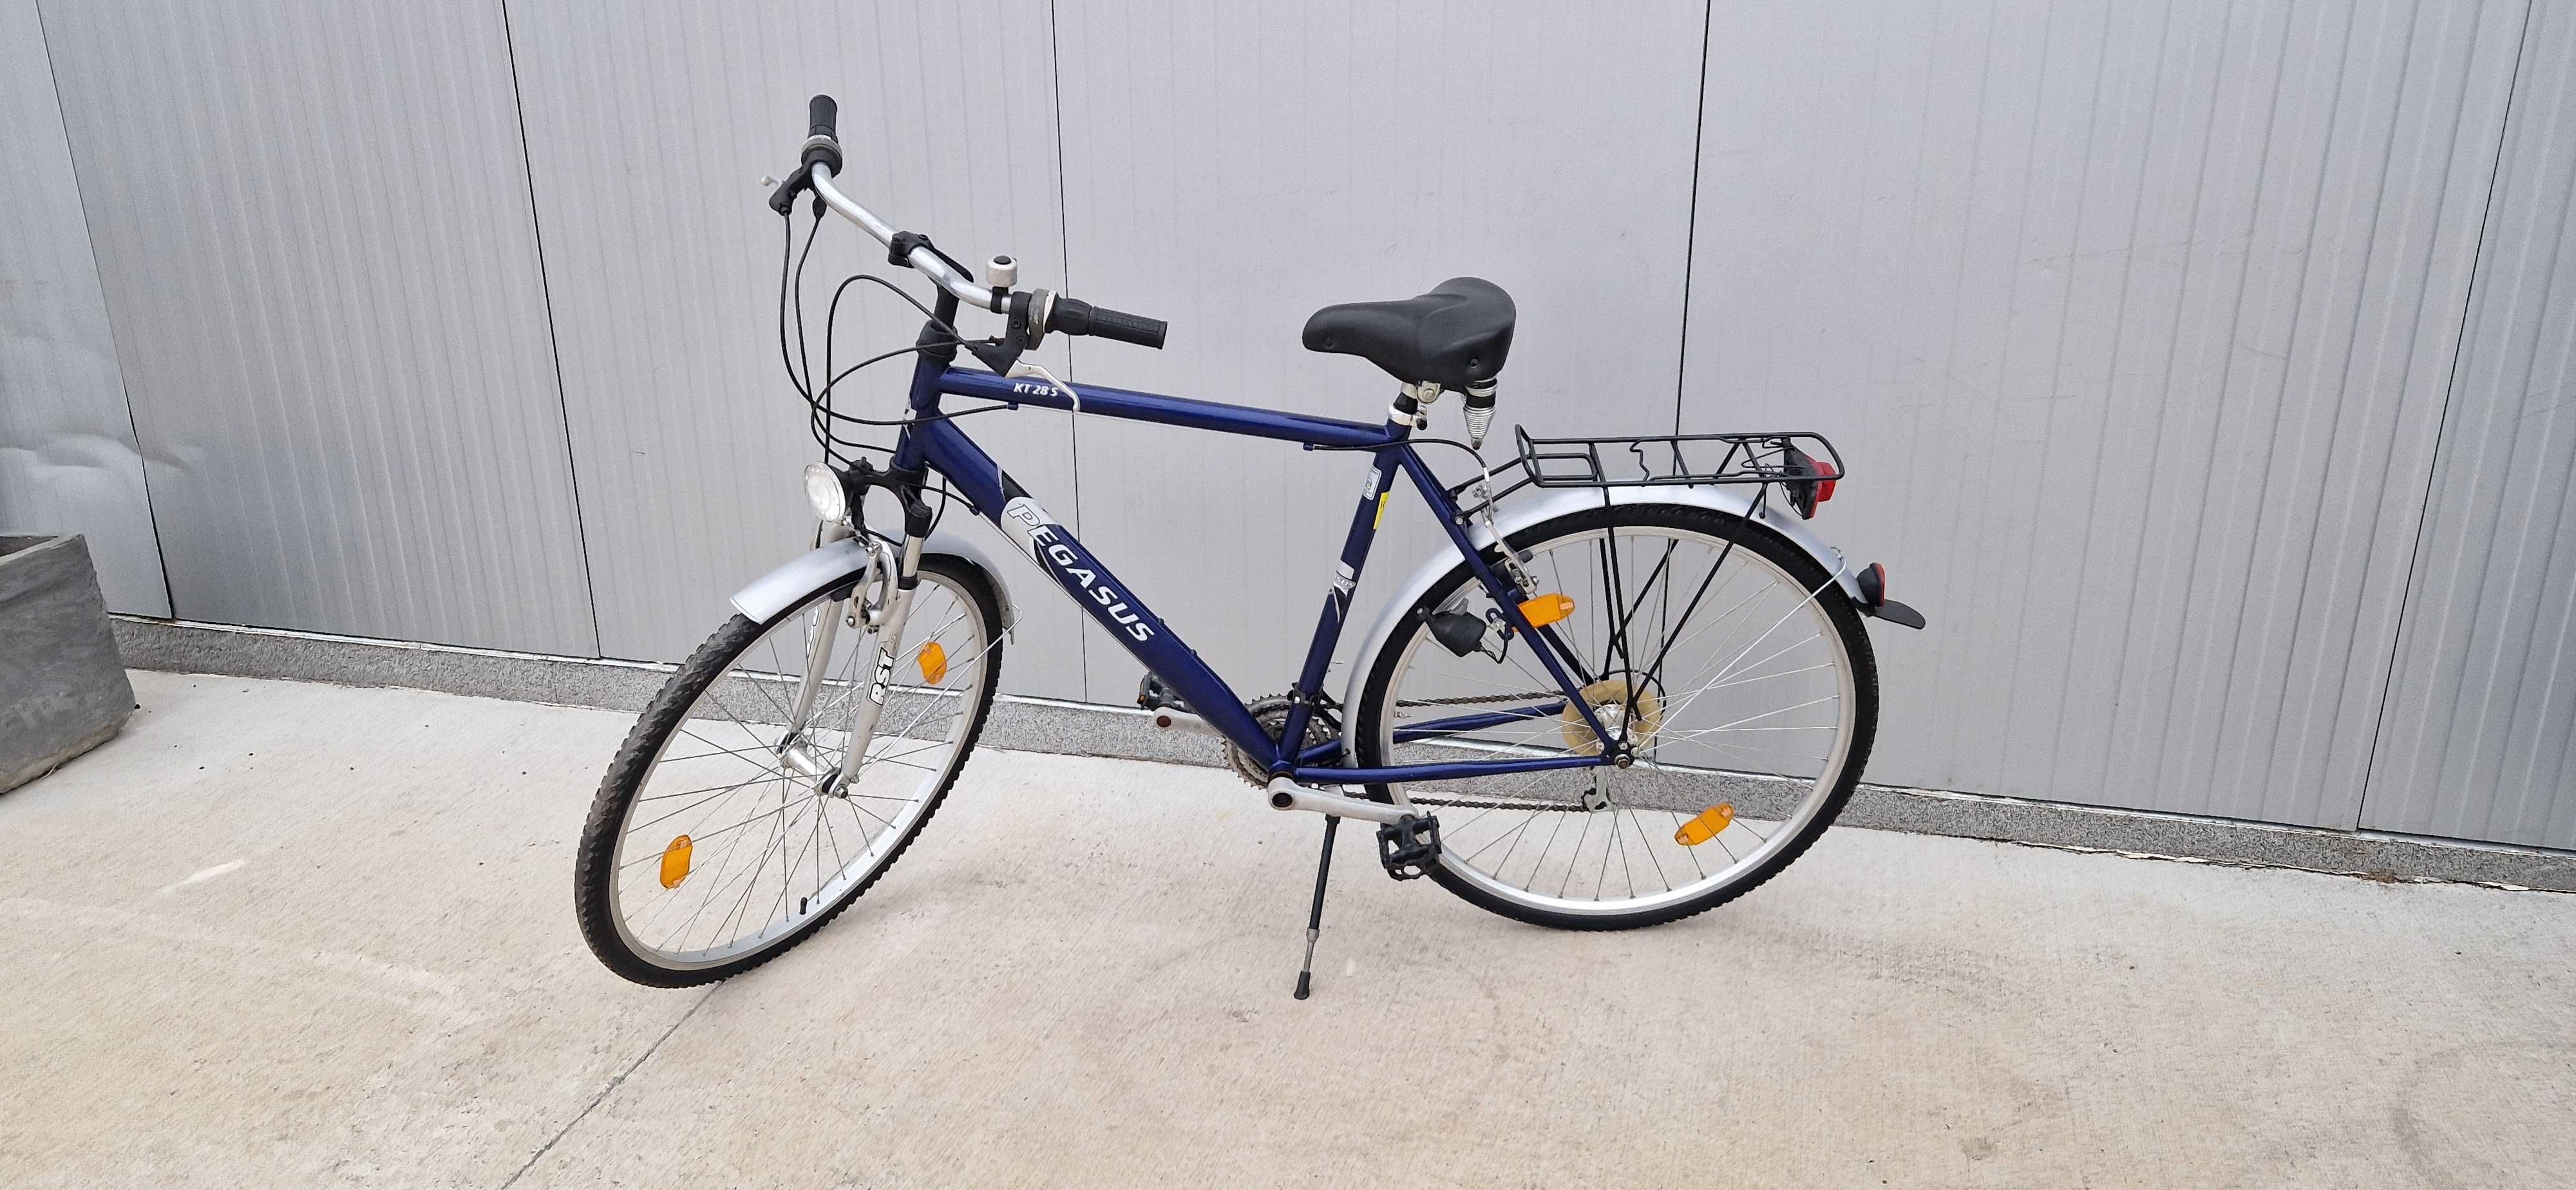 Градски велосипед PEGASUS колело 28"